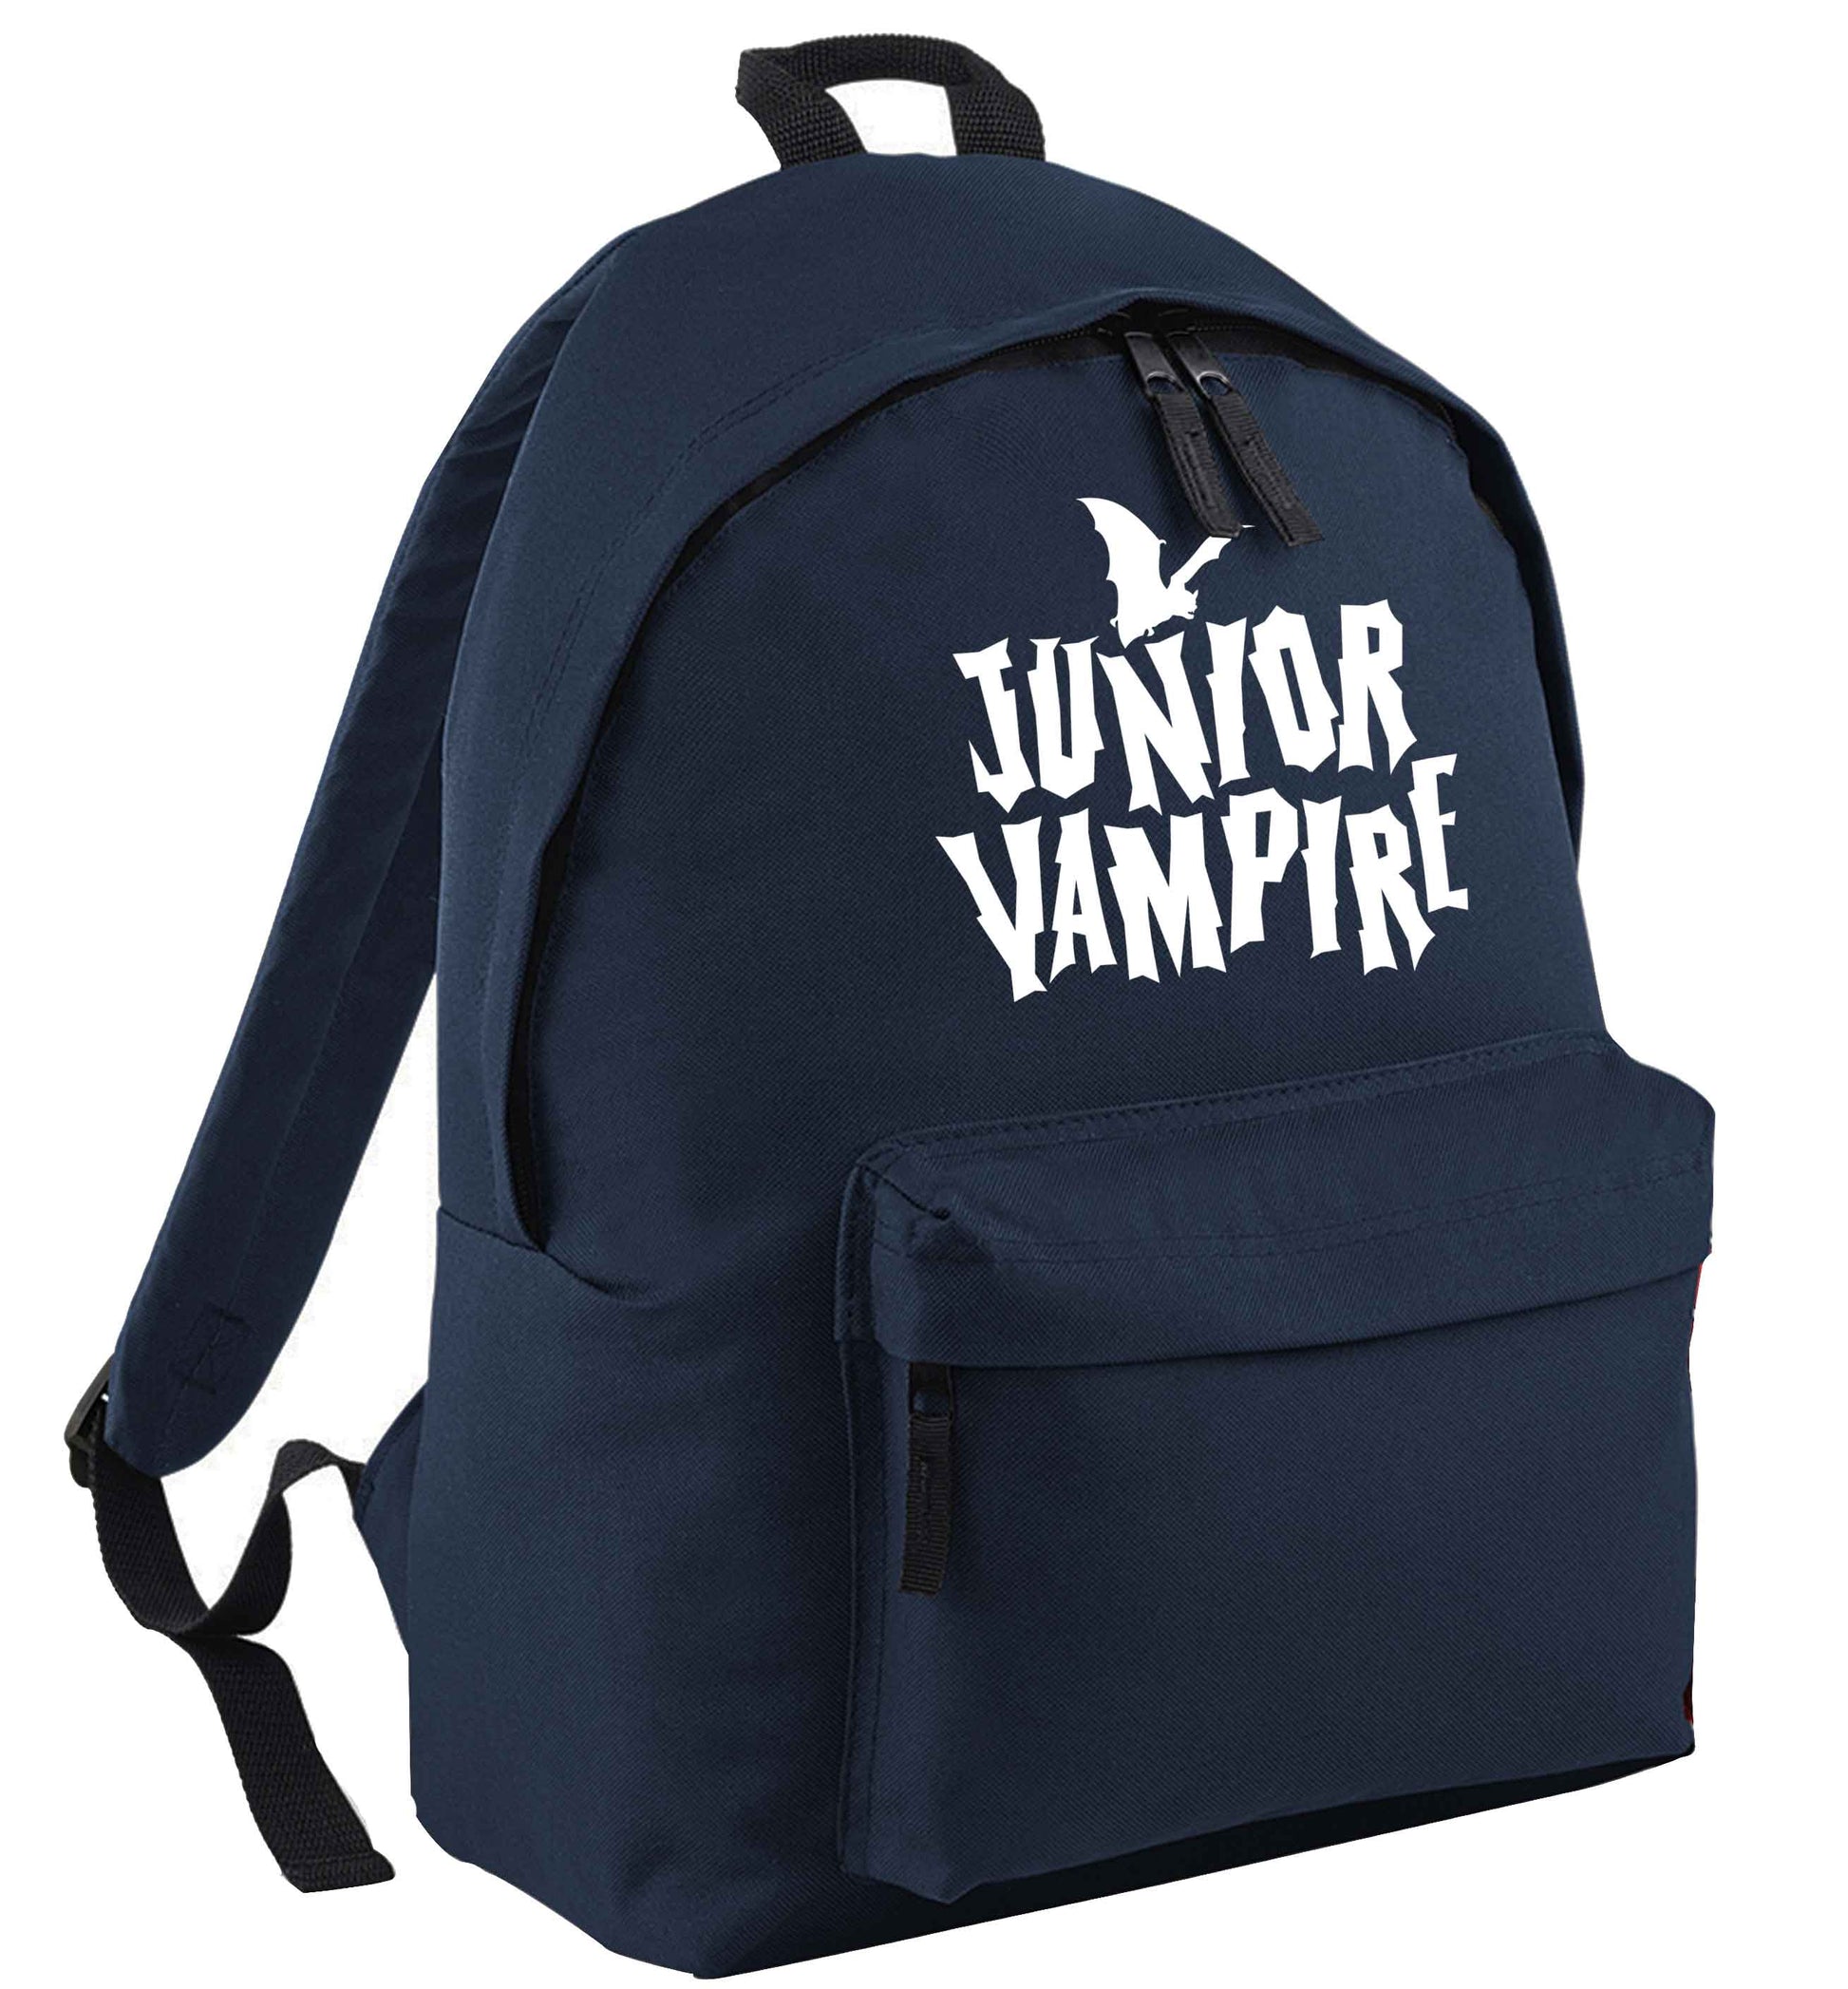 Junior vampire navy adults backpack